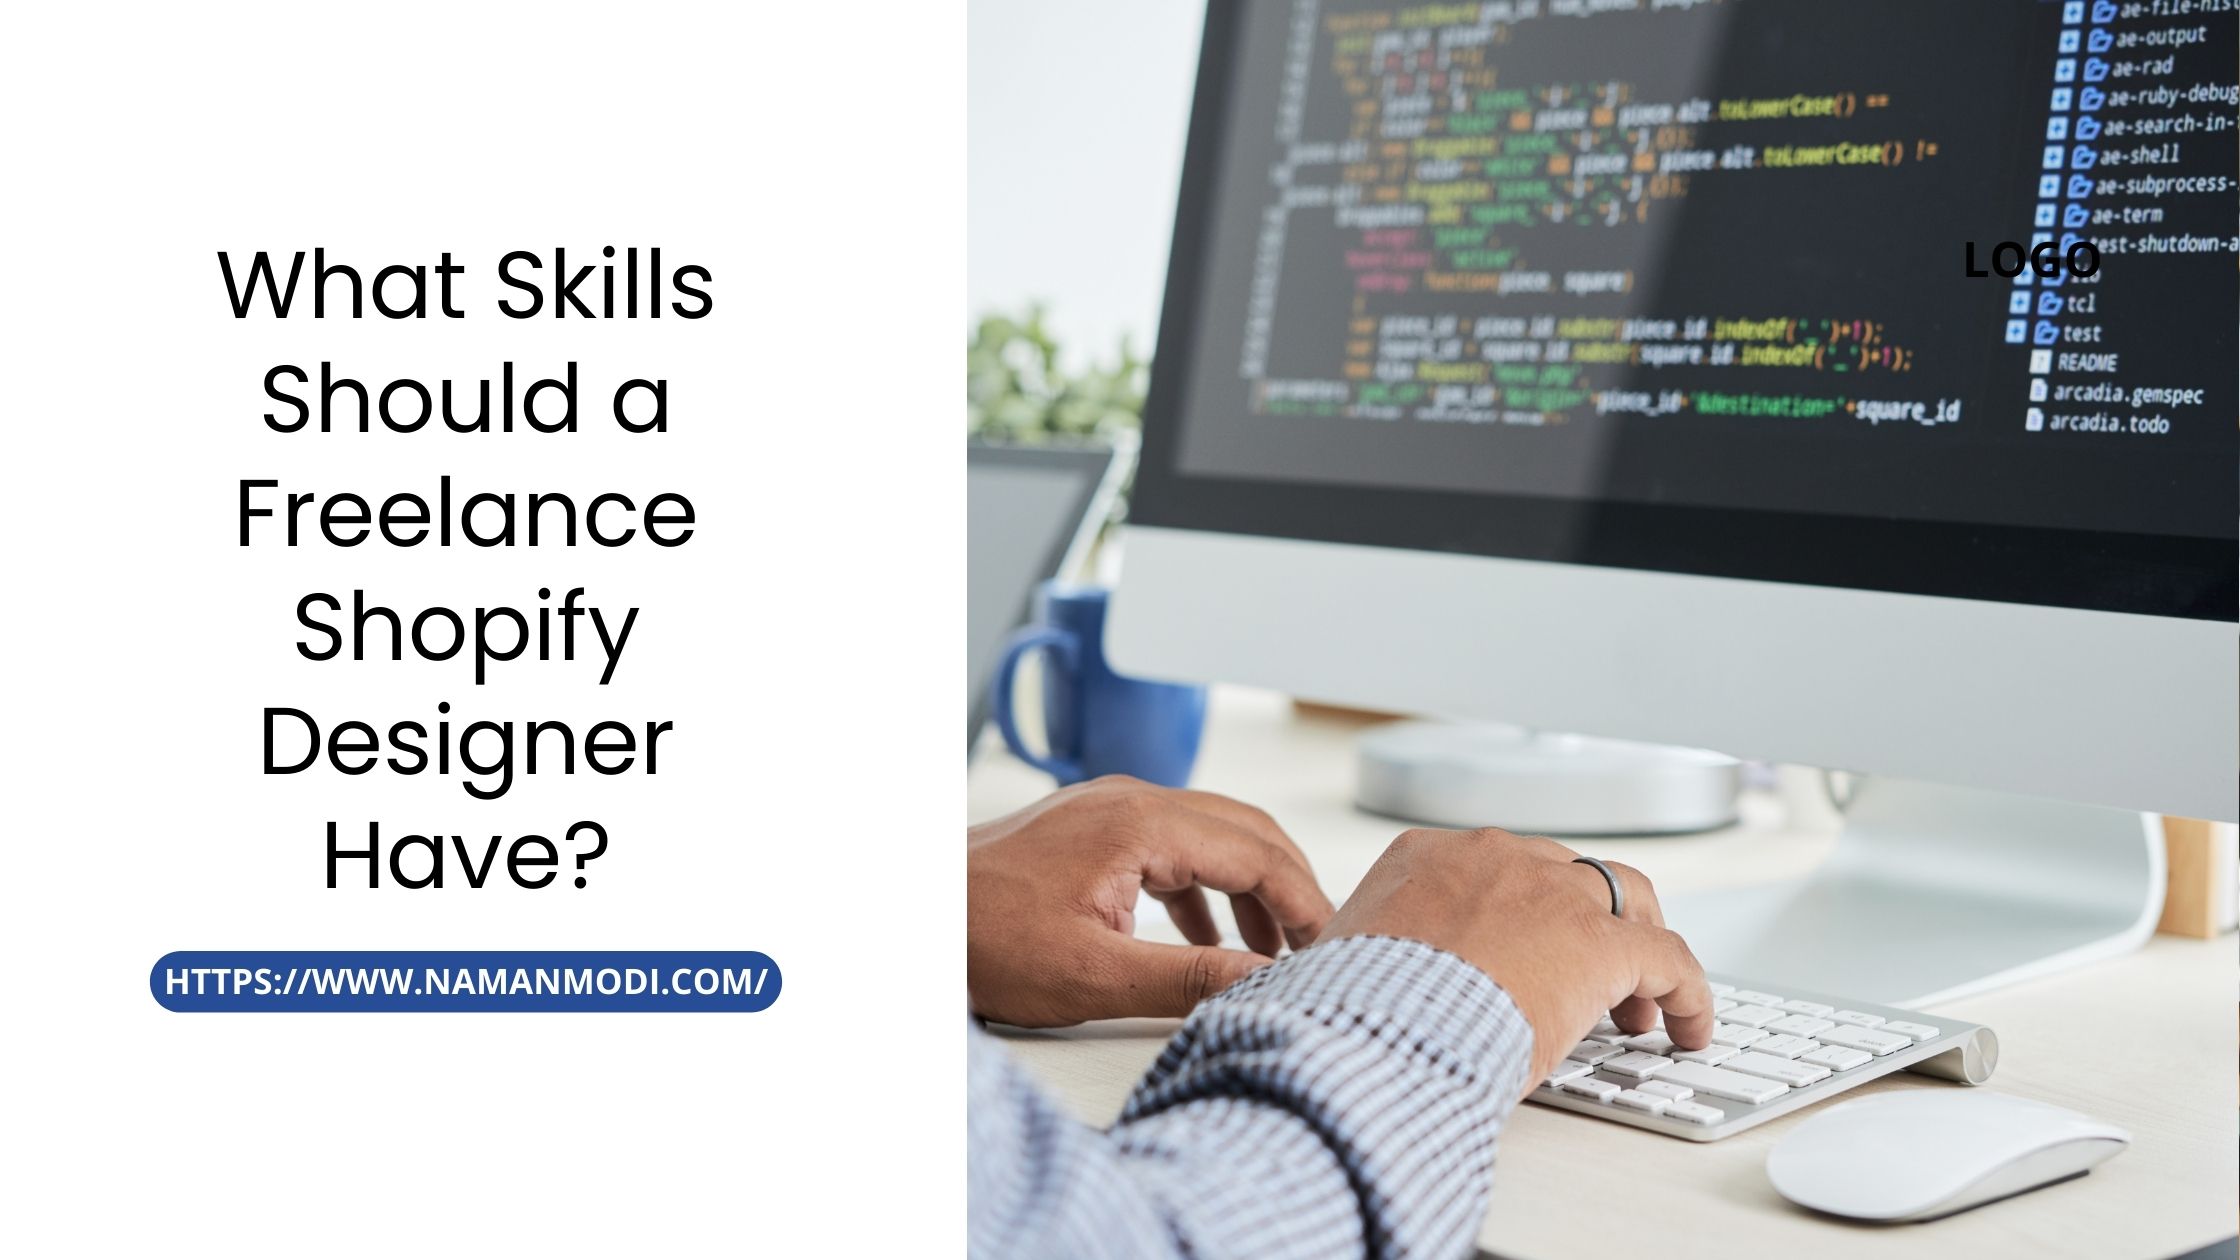 What Skills Should a Freelance Shopify Designer Have?